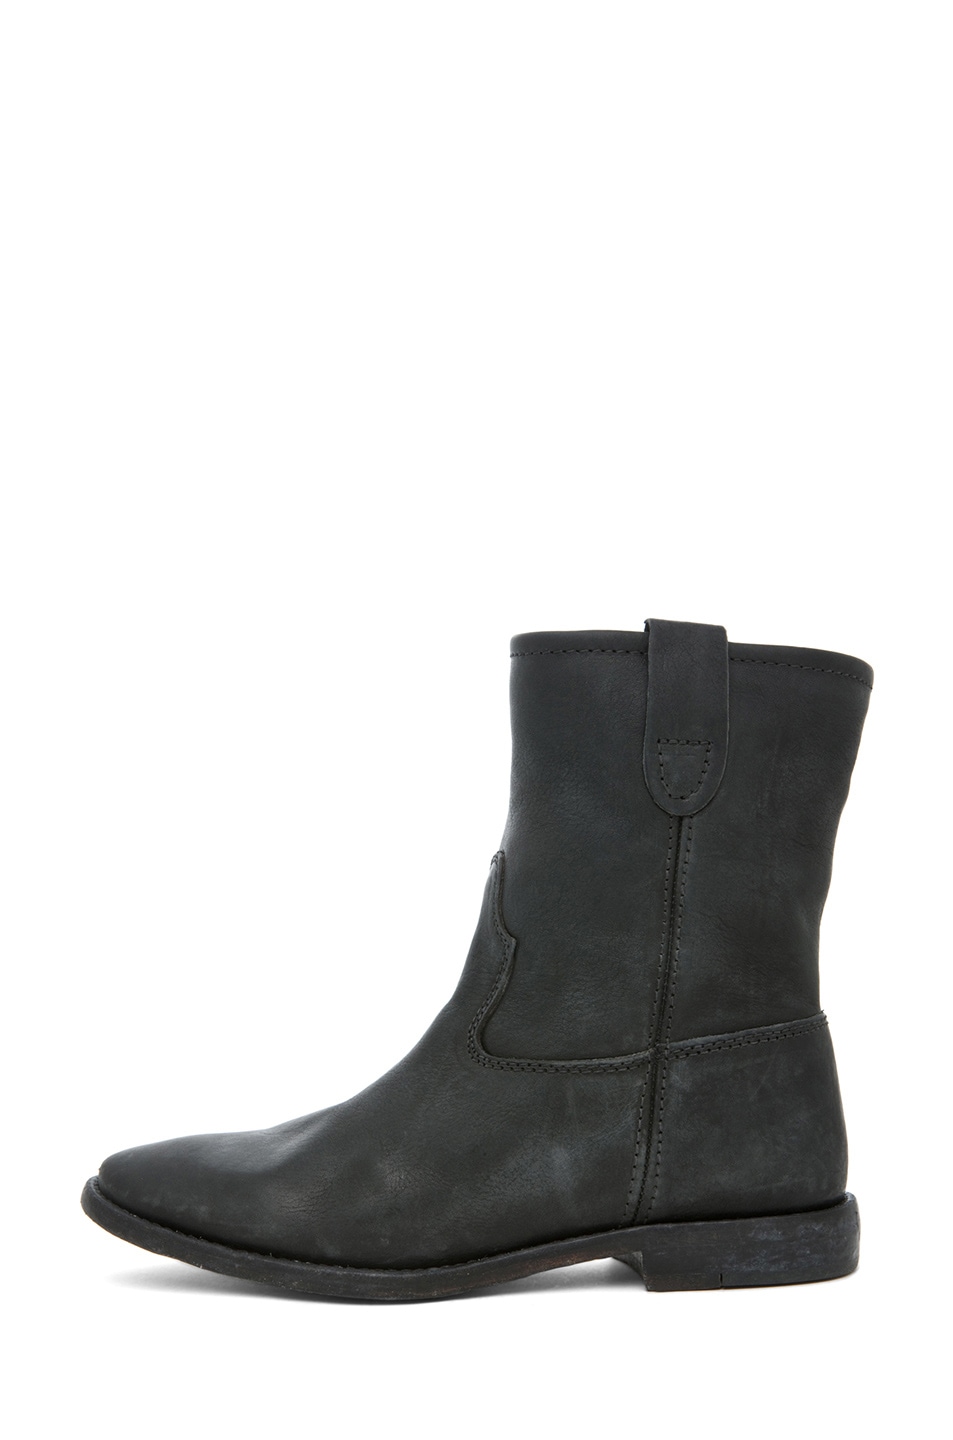 Isabel Marant Jenny Calfskin Leather Boot in Noir | FWRD